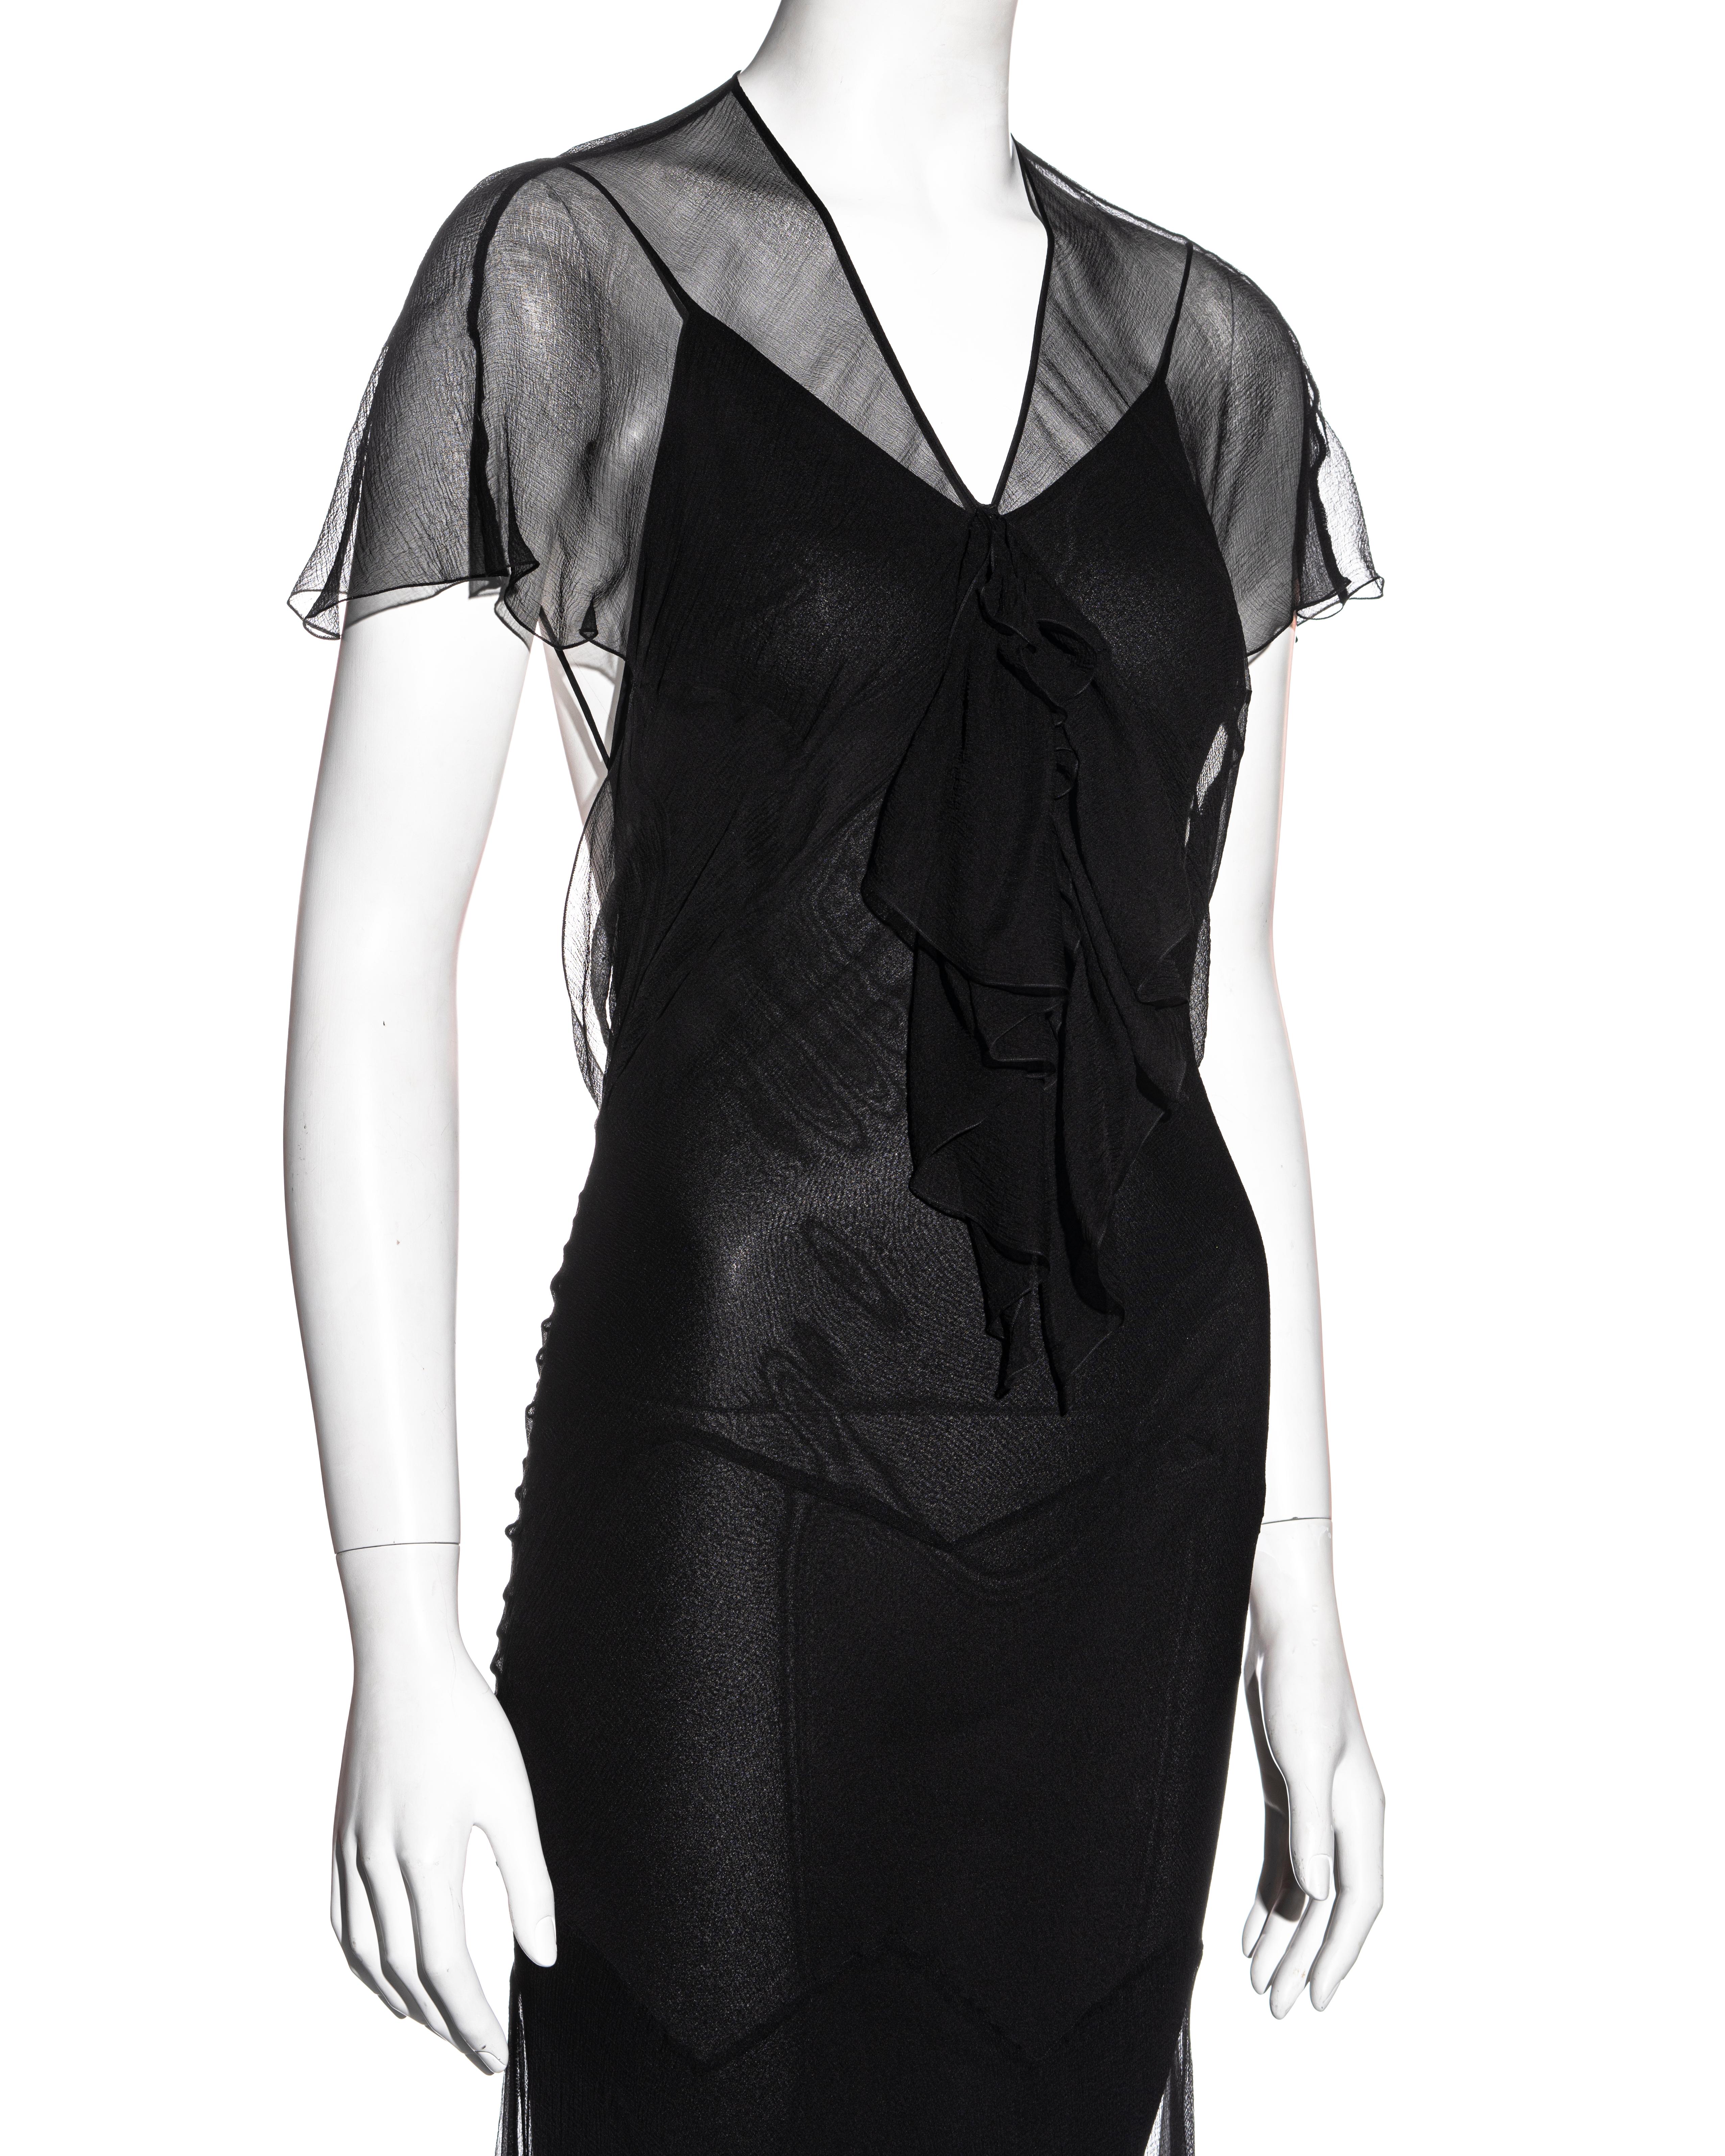 John Galliano black silk chiffon double layered bias cut dress, c. 1995 - 1999 1